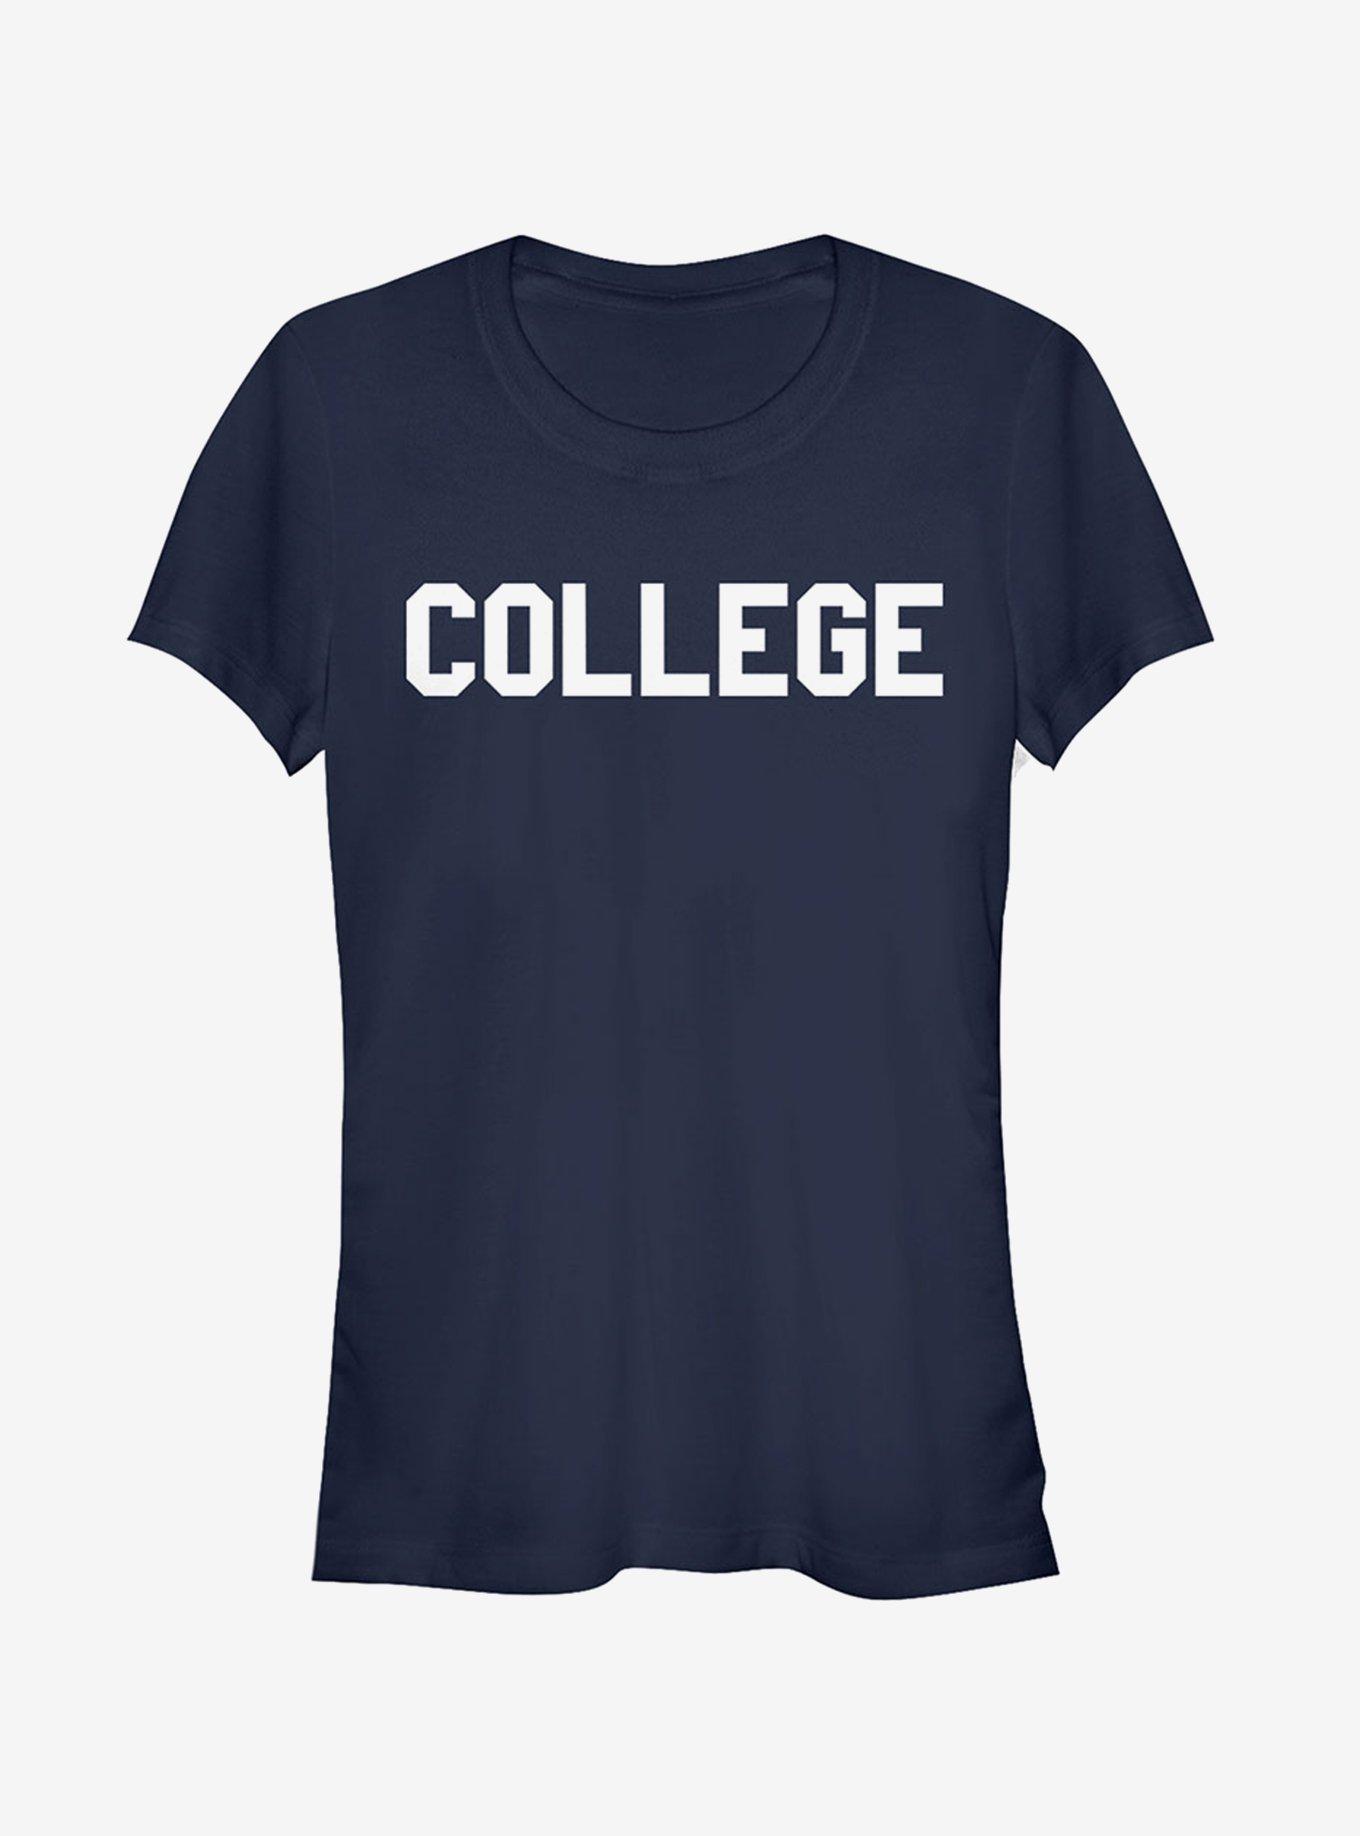 College Text Girls T-Shirt, NAVY, hi-res